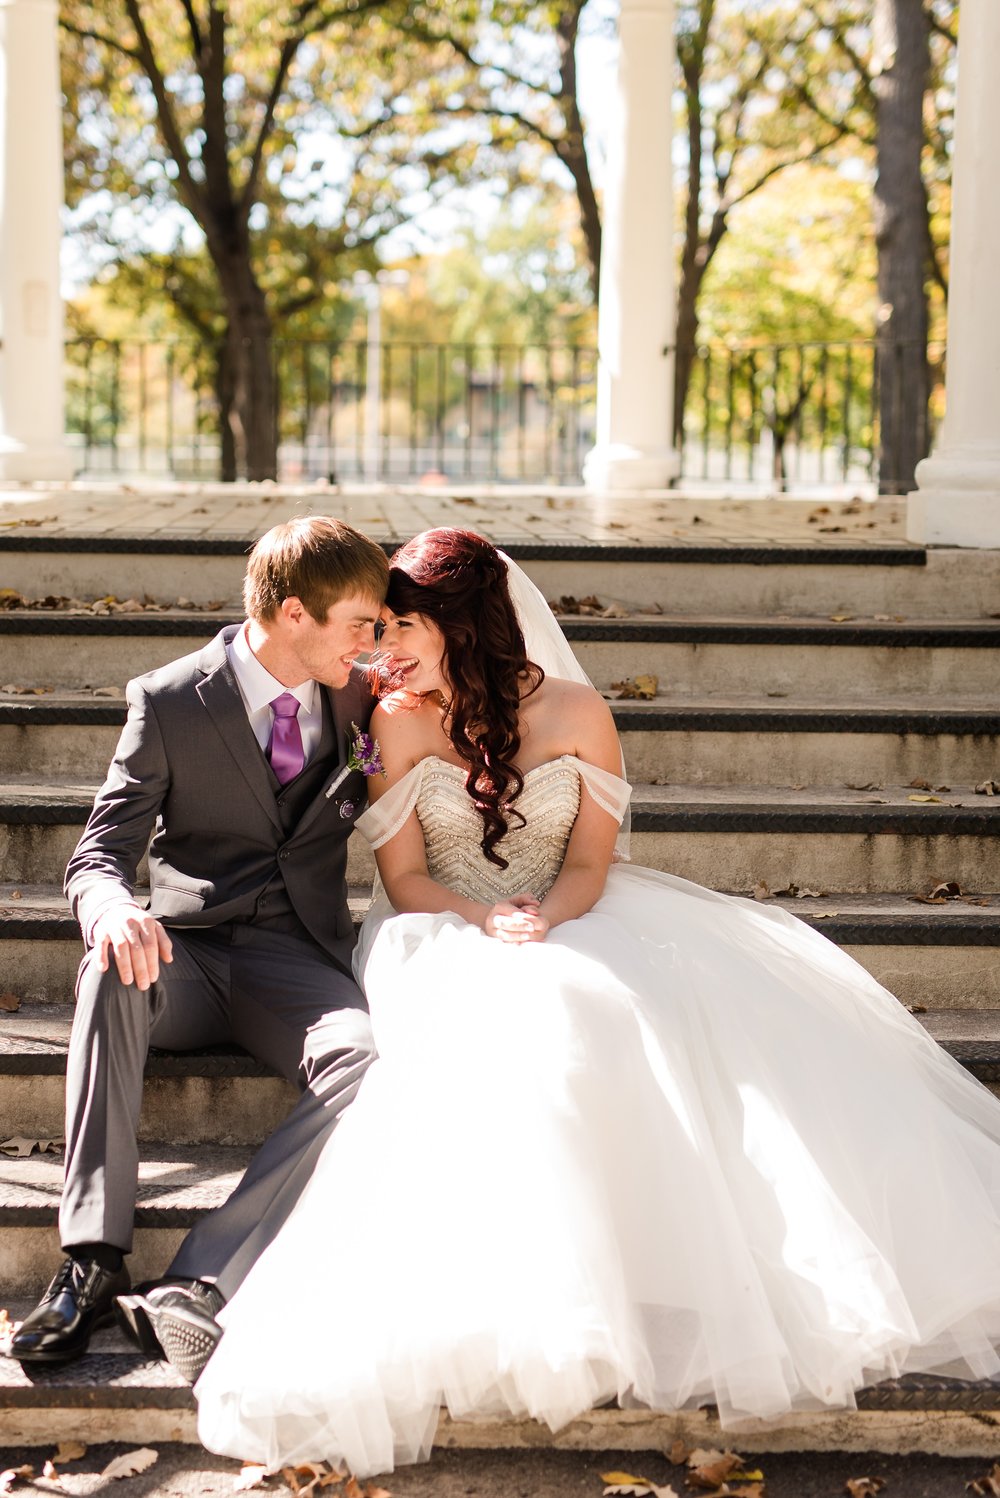 Downtown Fargo Disney Themed Wedding by Amber Langerud Photography | Bride & Groom Island Park sitting on steps